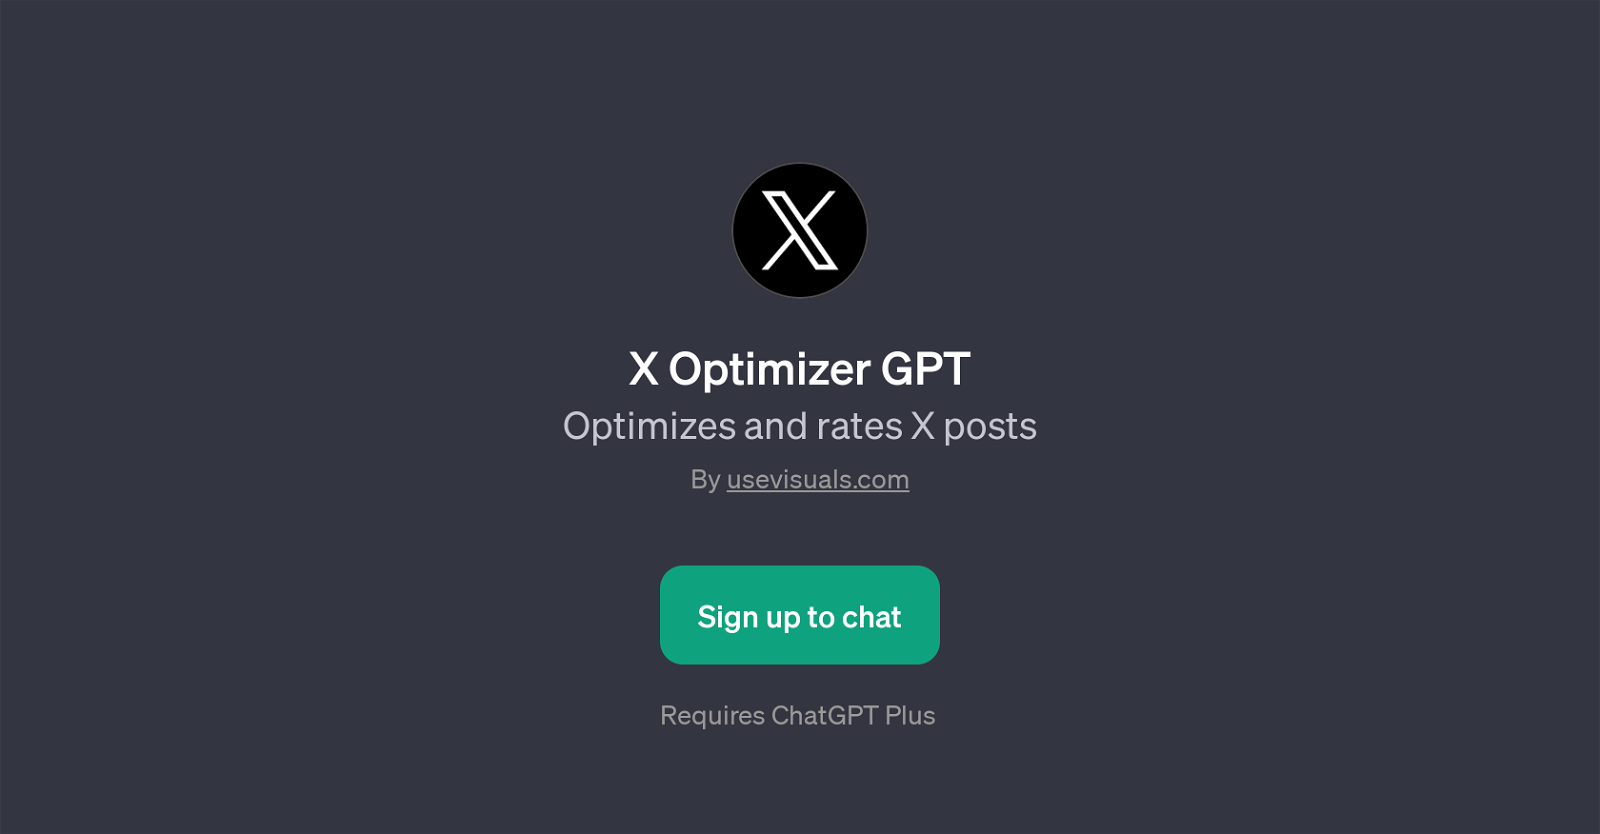 X Optimizer GPT website